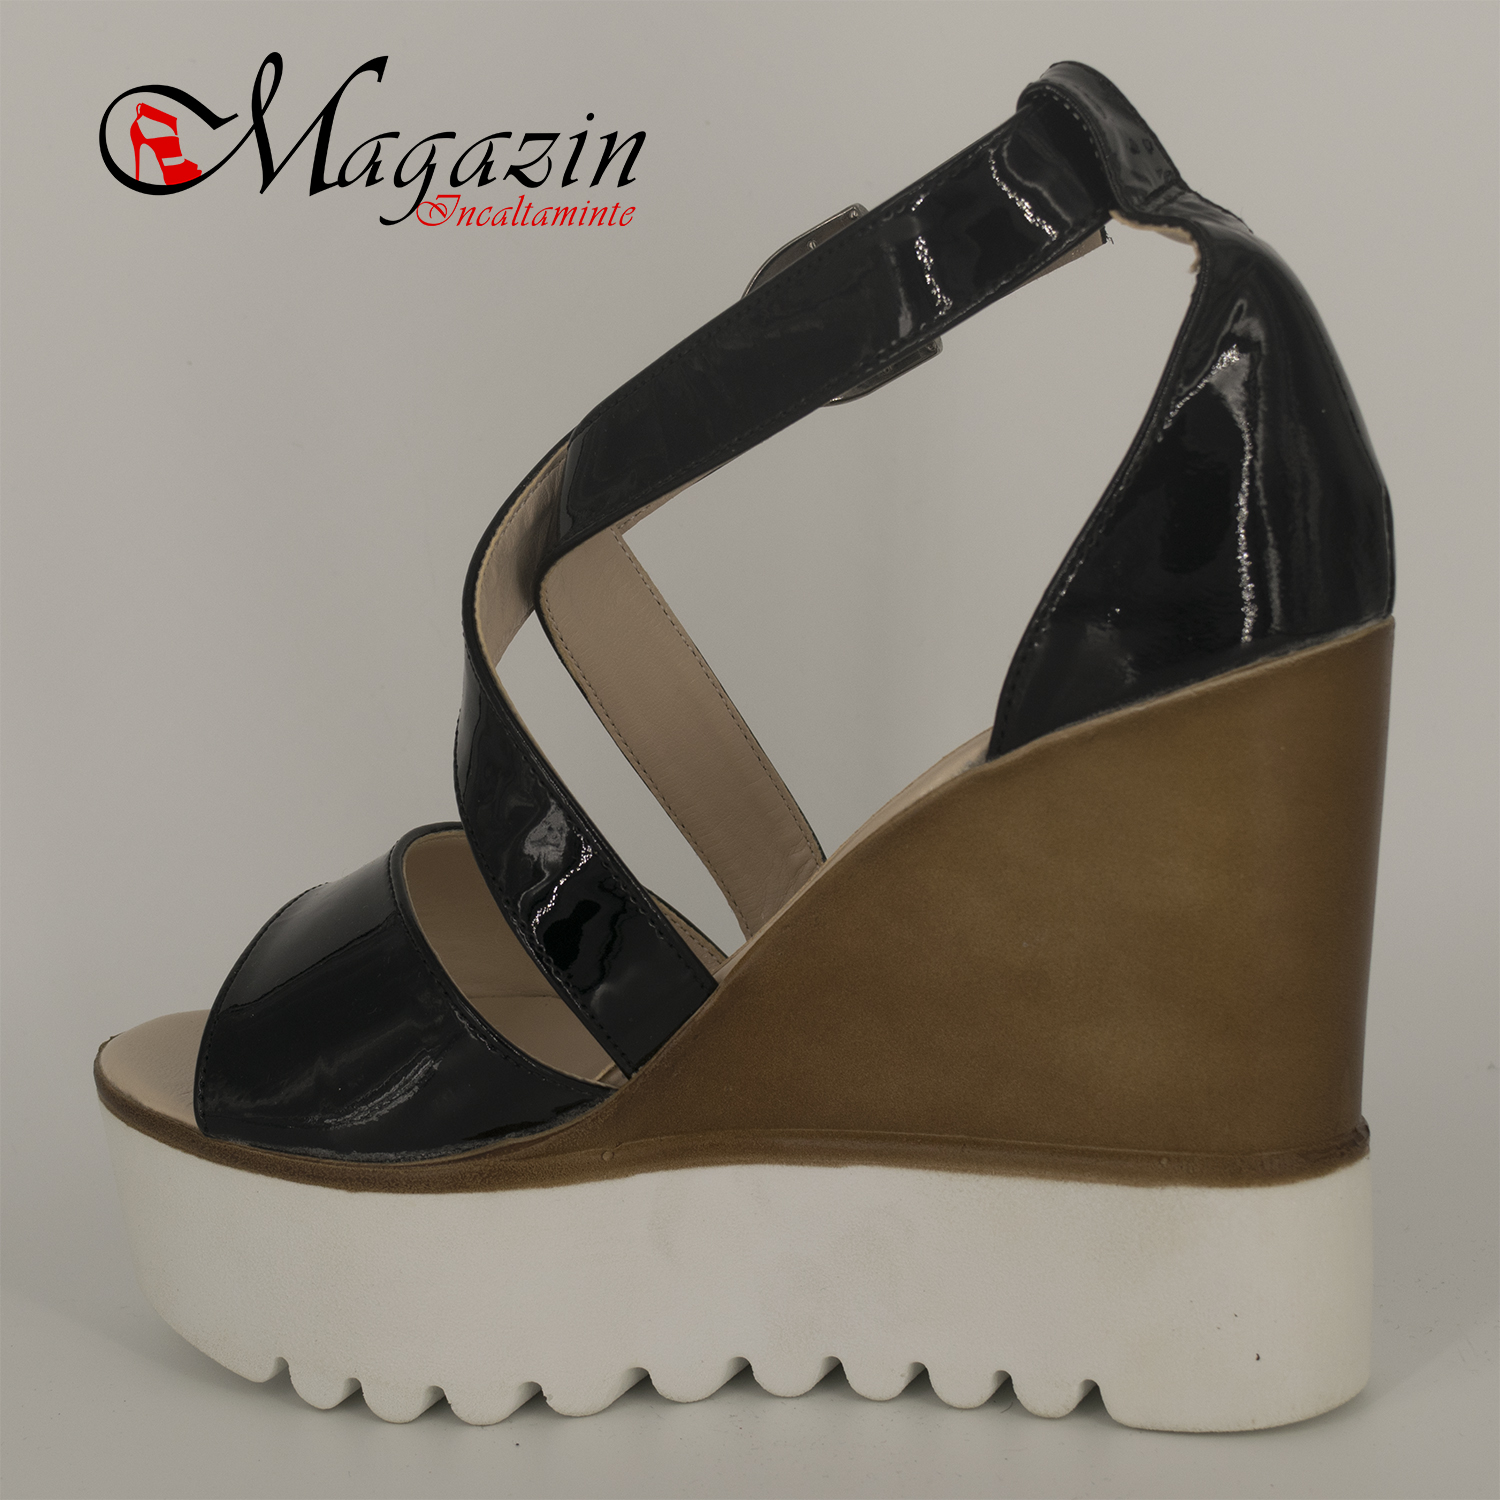 Sandale cu platforma din piele naturala - Gamelli 955 Negre